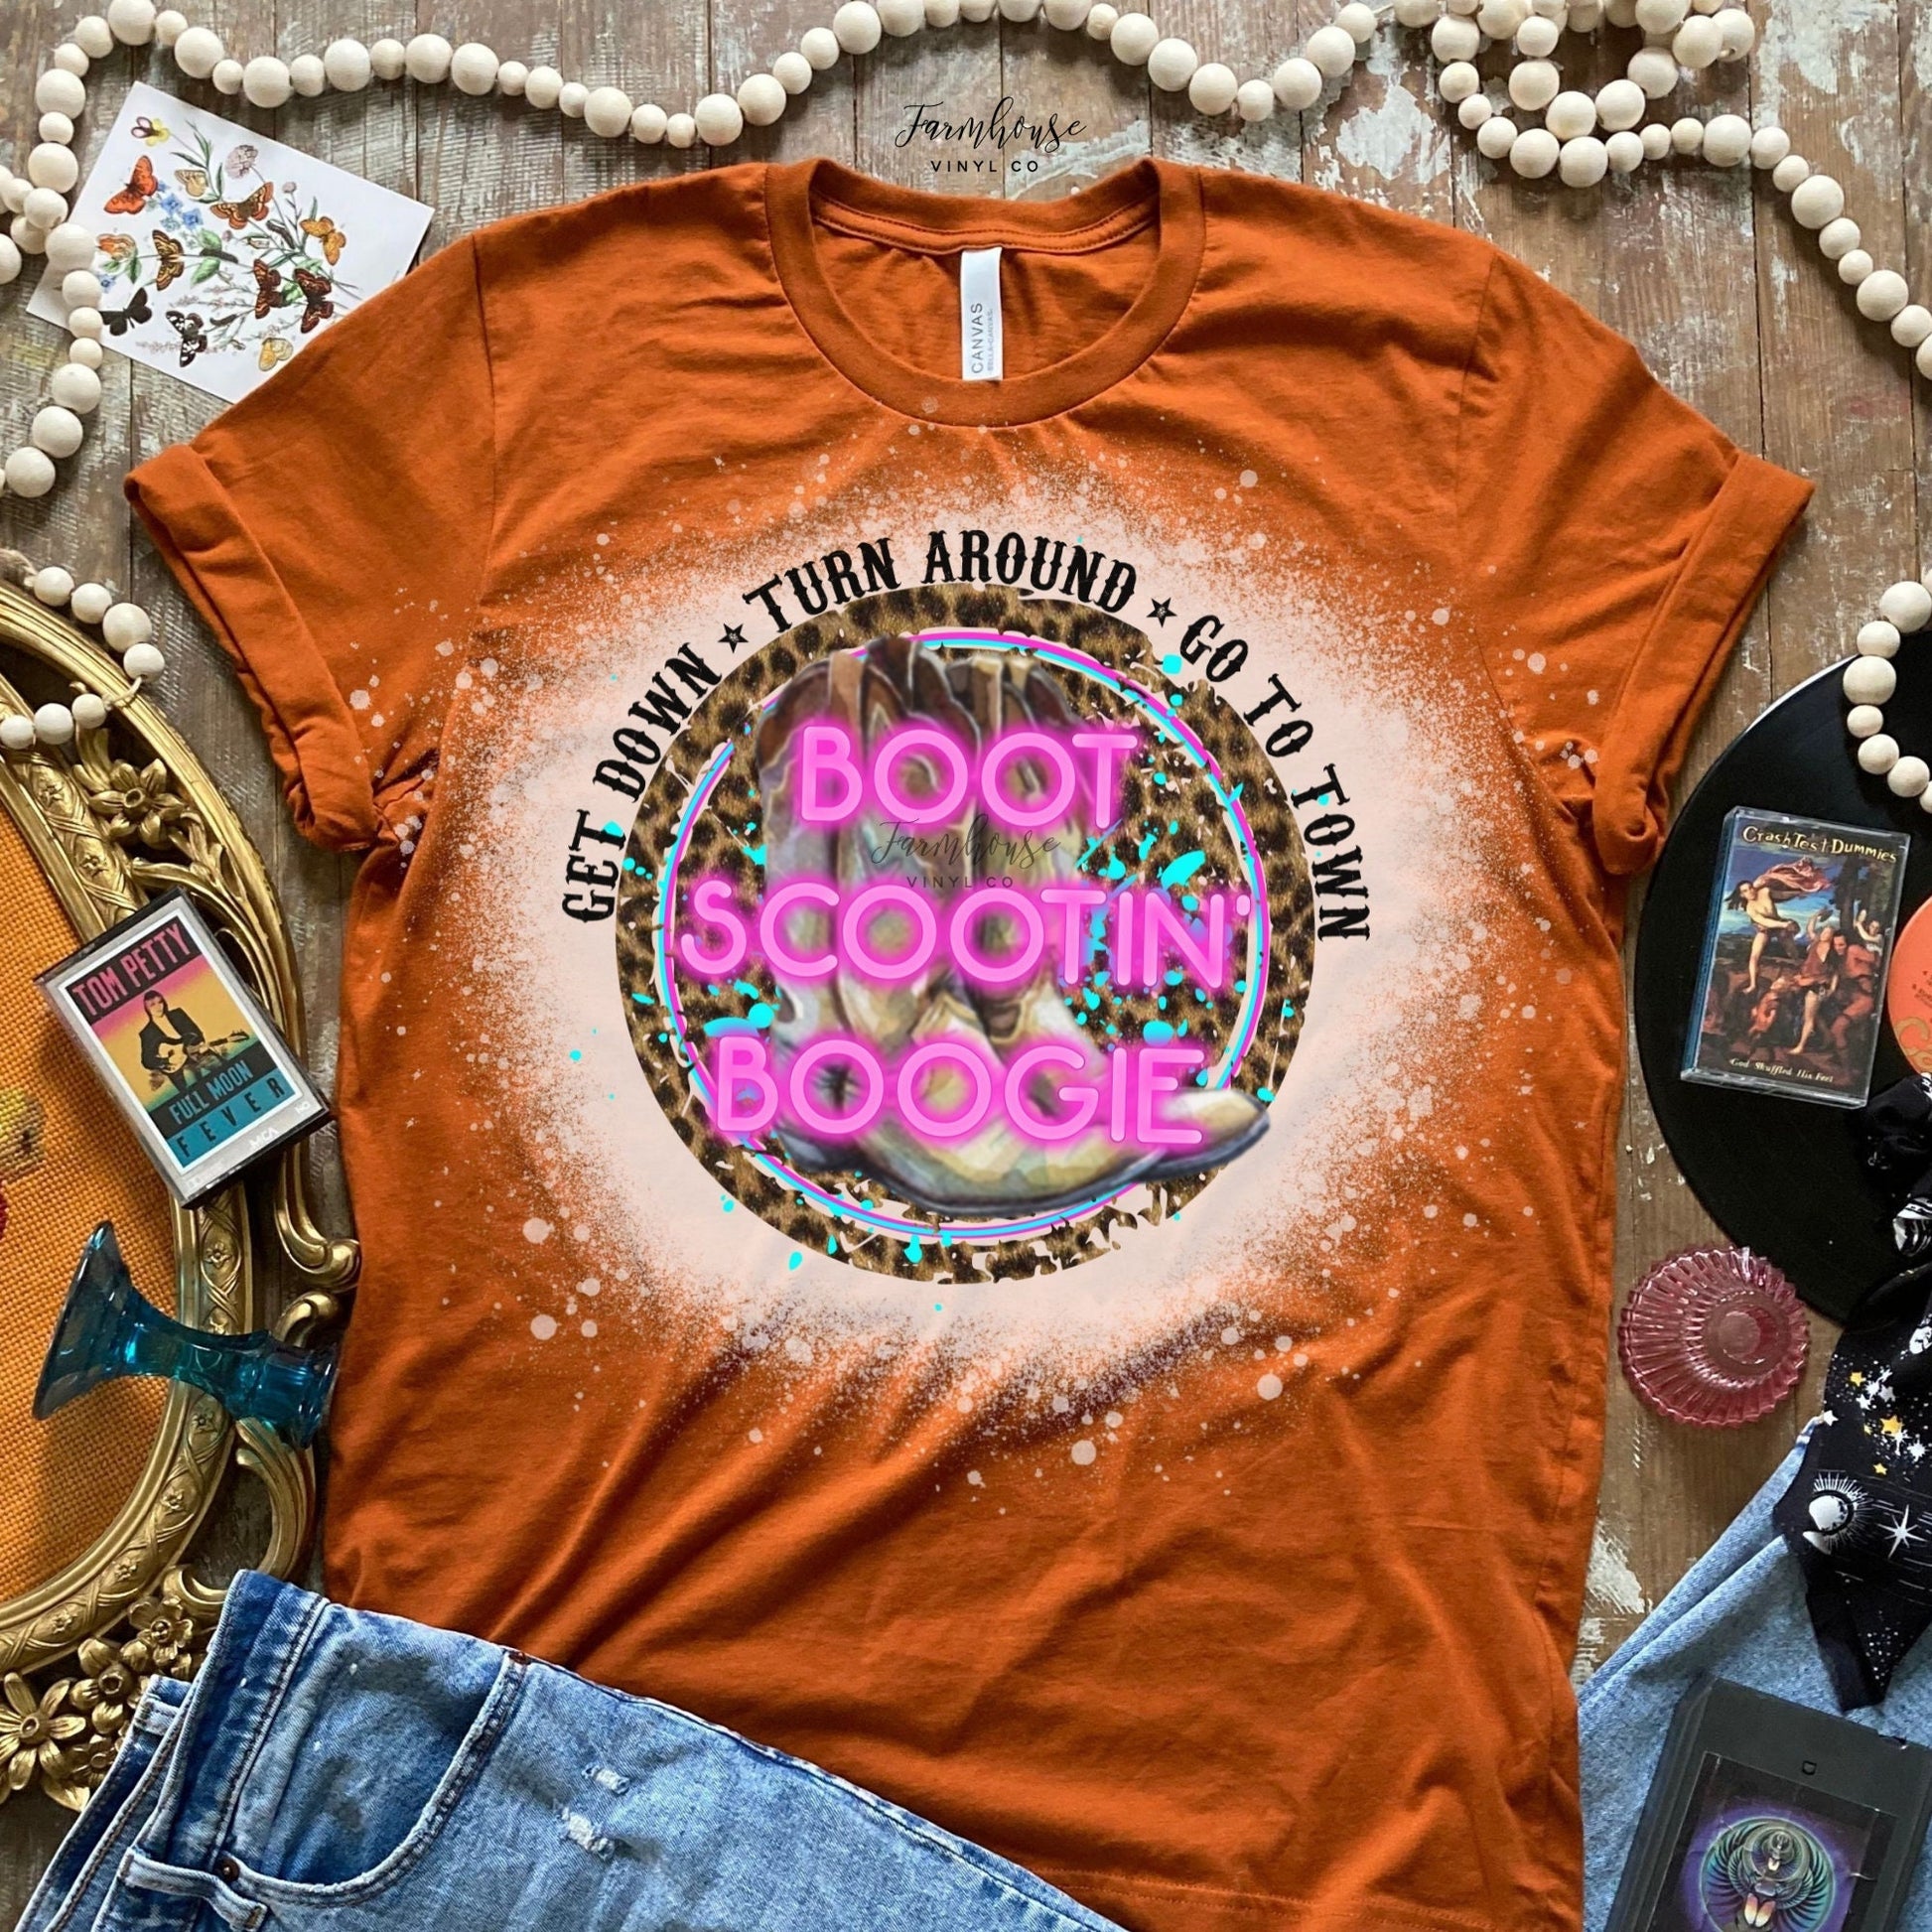 Brooks Dunn Boot Scootin’ Boogie Bleached Shirt / Trendy shirt / Country Music Fan Shirt / 90s country music artist / Music Bleached Shirt - Farmhouse Vinyl Co